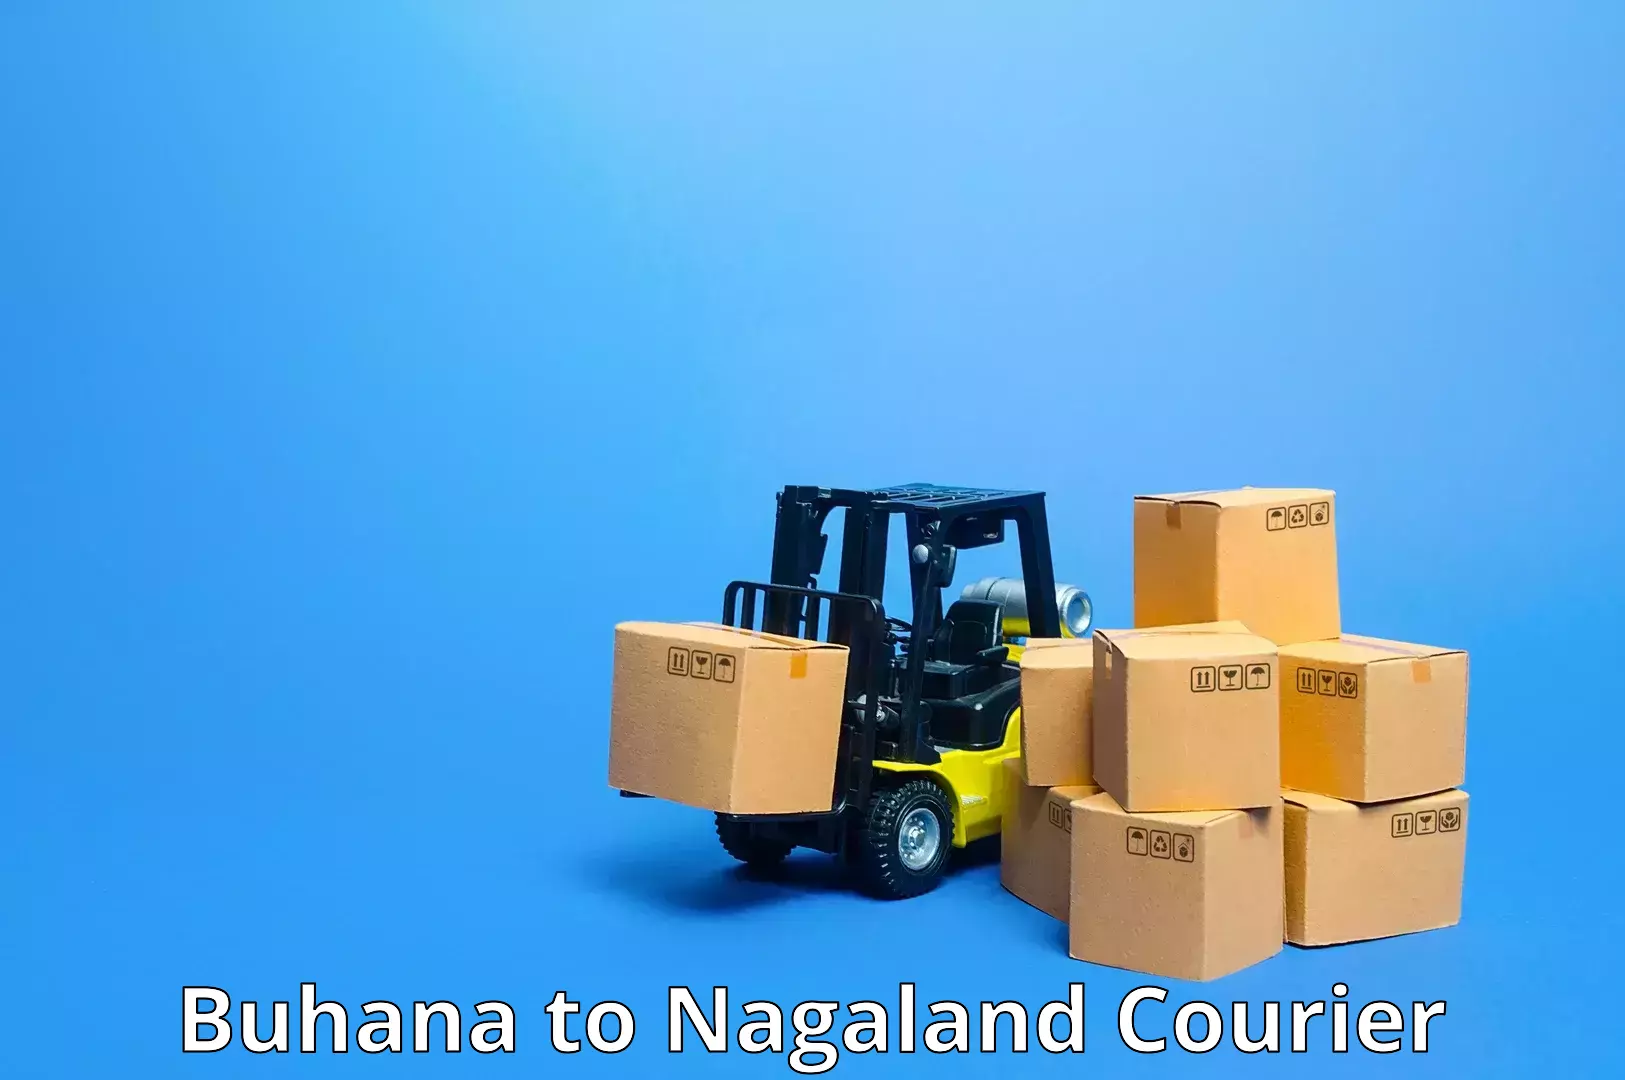 Specialized shipment handling Buhana to Nagaland